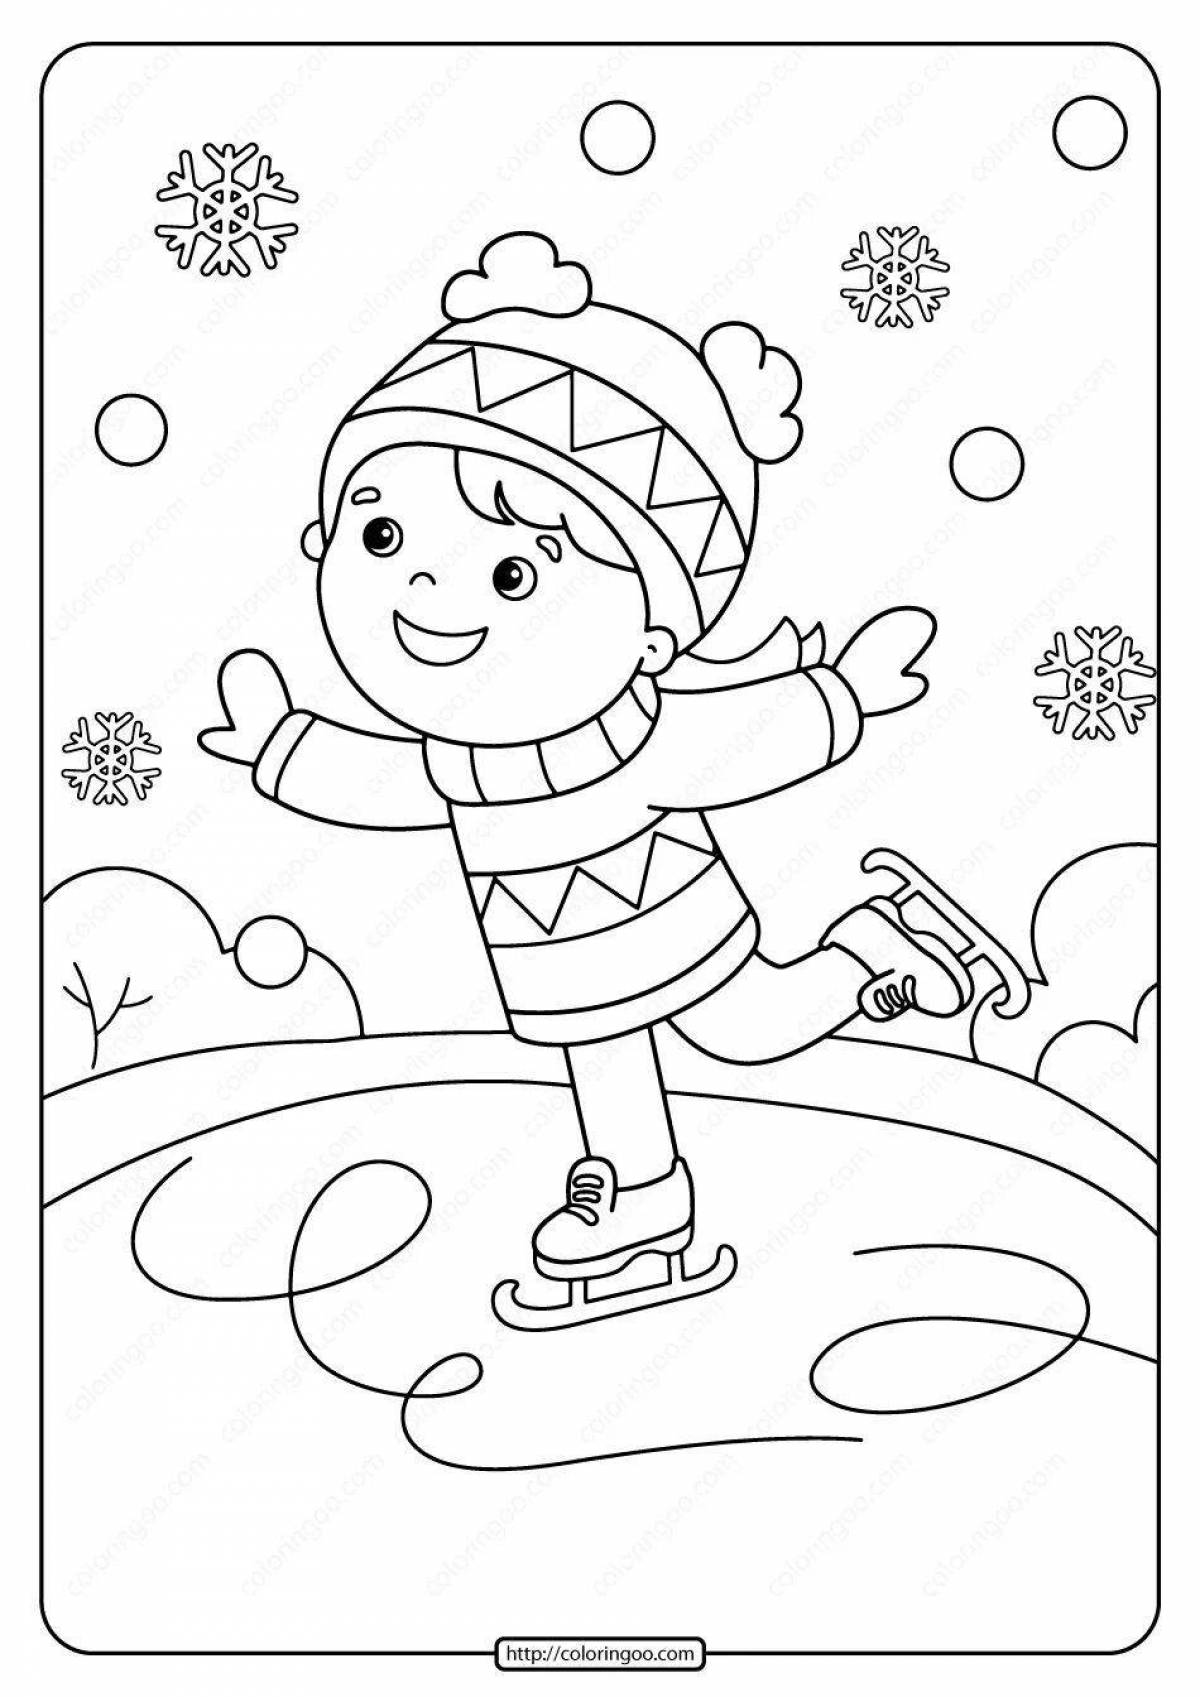 Adorable winter sports coloring book for preschoolers